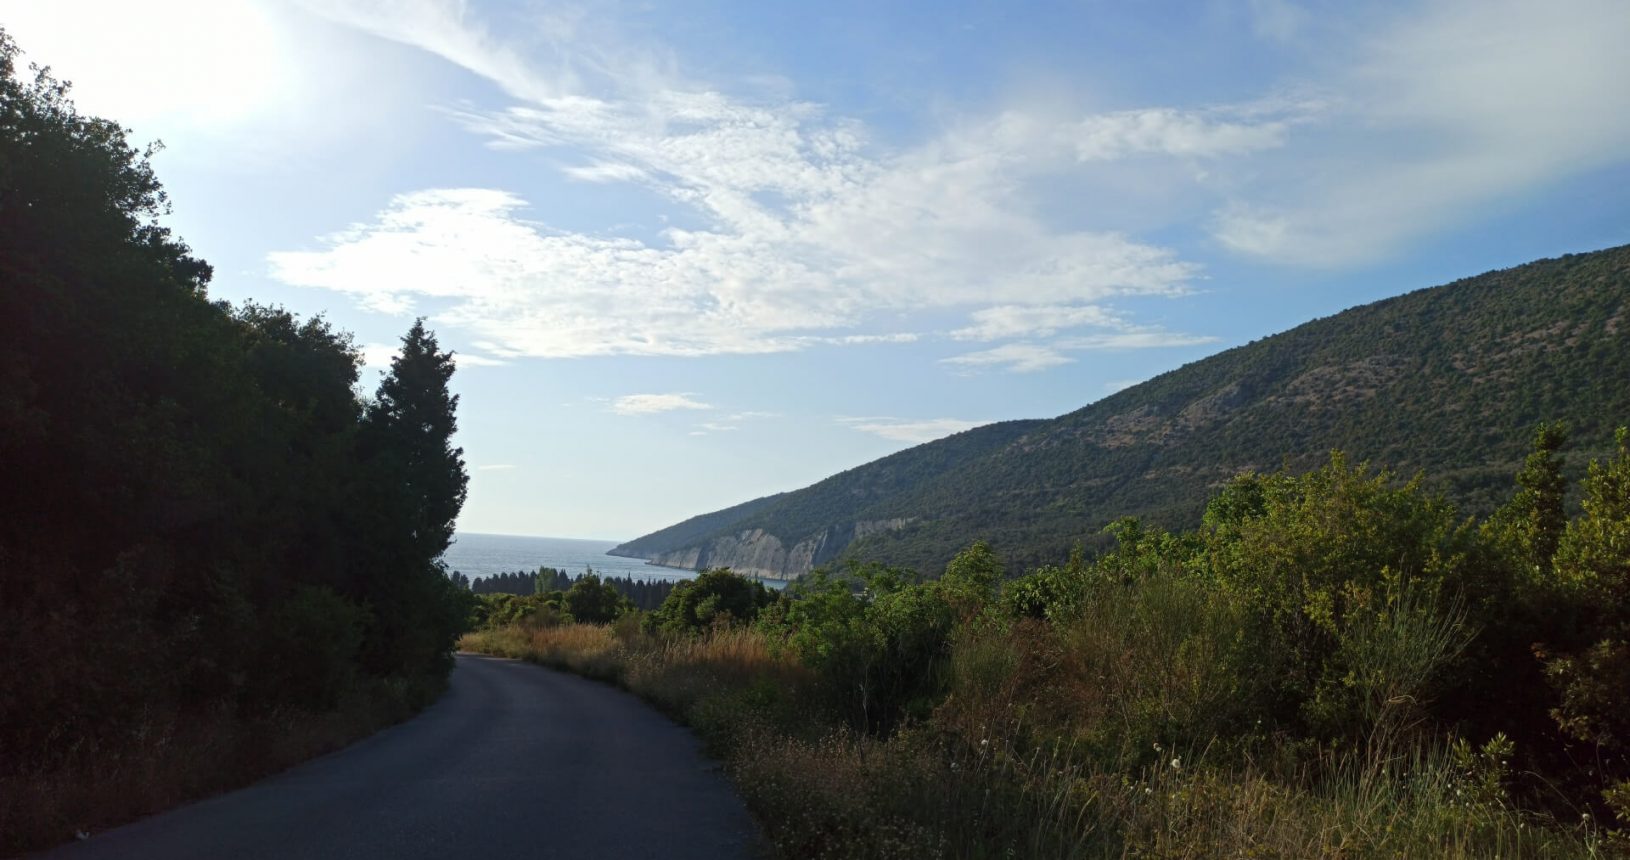 The road to Valdanos beach